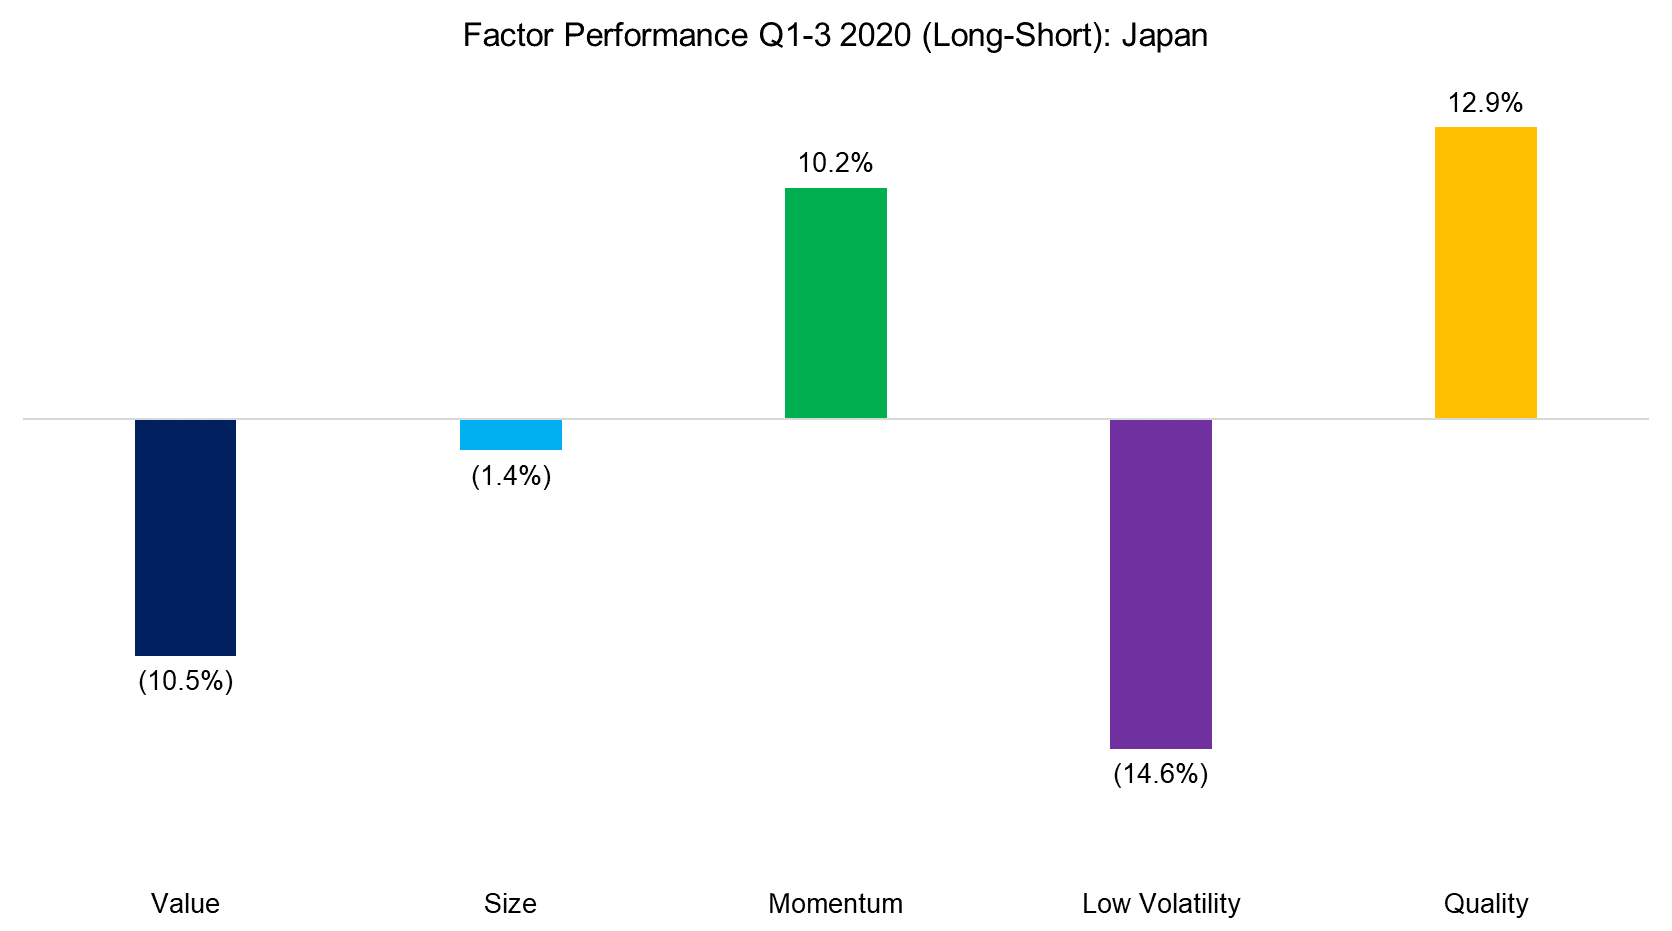 Factor Performance Q1-3 2020 (Long-Short) Japan